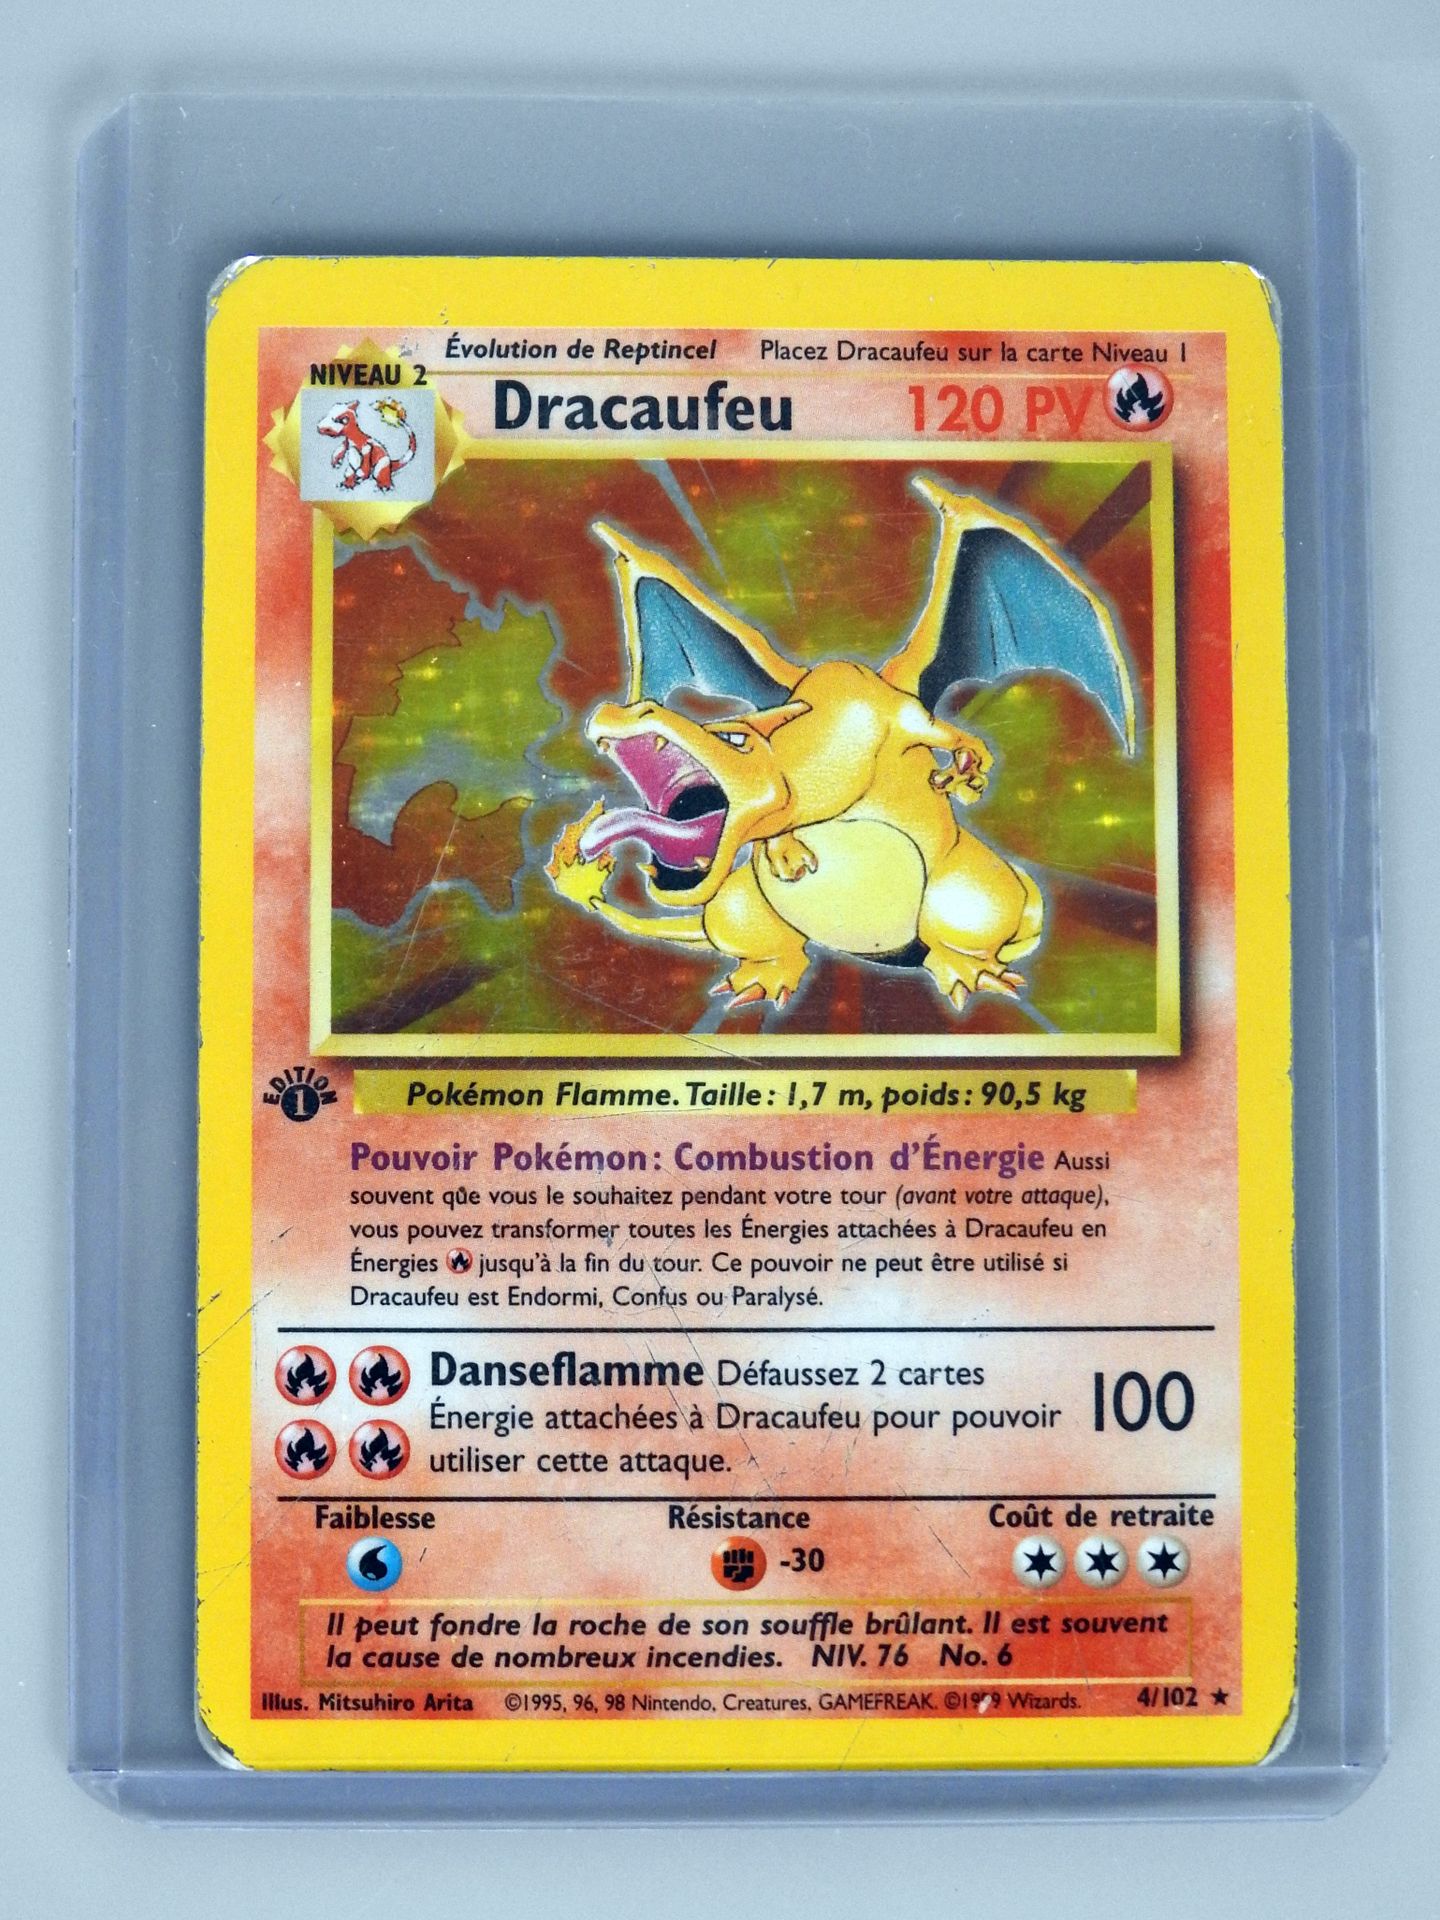 Null DRACAUFEU Ed 1

Wizards Block Basic Set 4/012

Pokémon-Karte mit kleinen Fe&hellip;